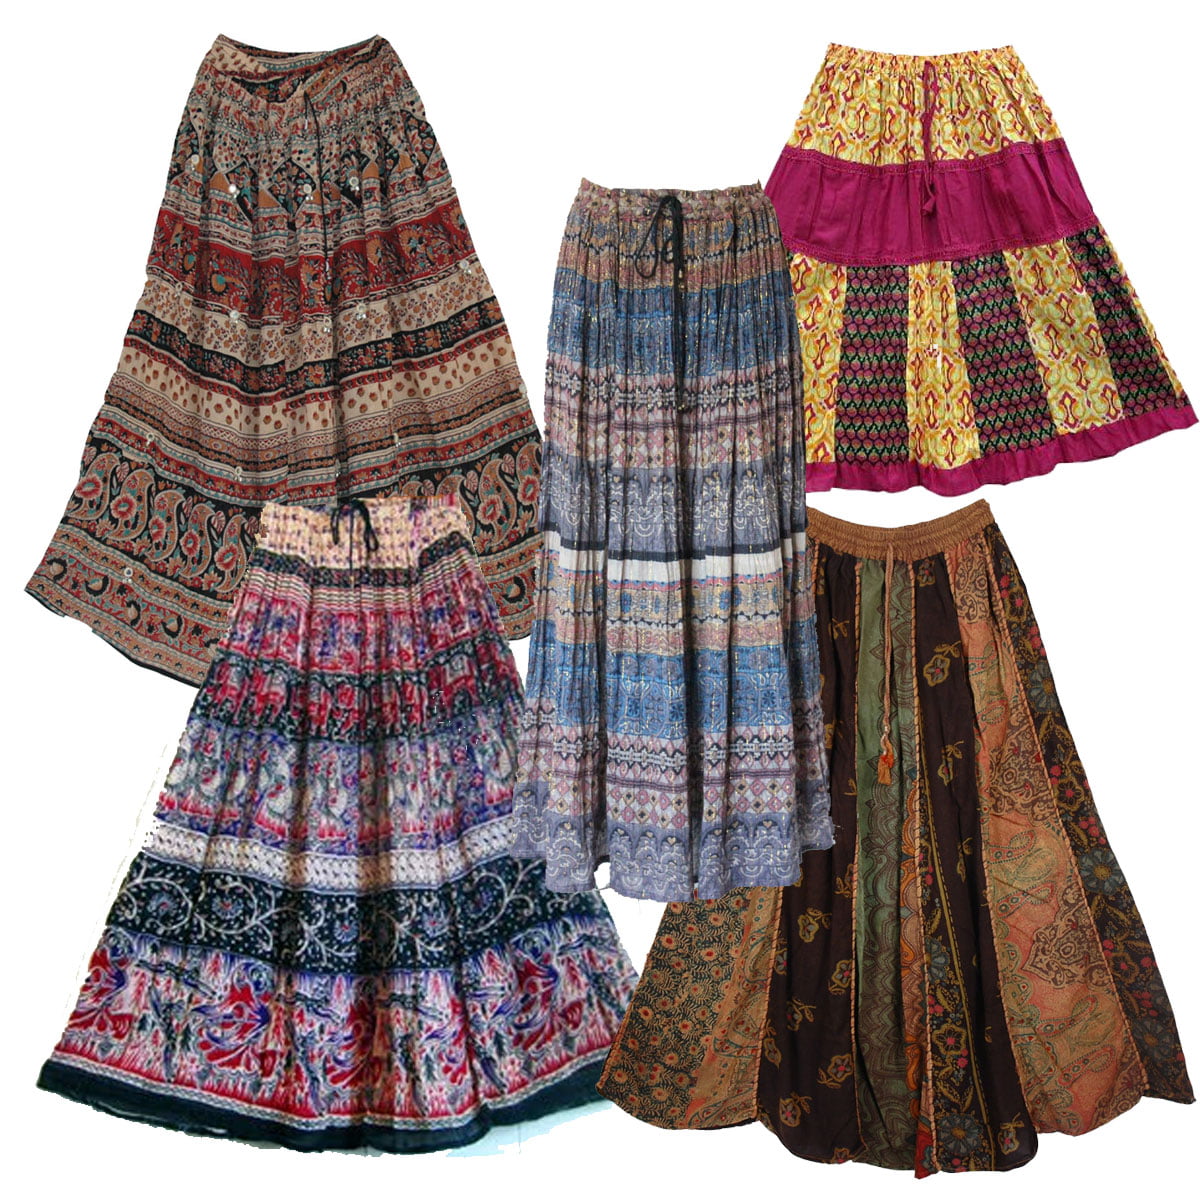 https://dustfactoryvintage.com/news/wp-content/uploads/2011/03/Vintage-gauze-hippie-indian-maix-skirt.jpeg